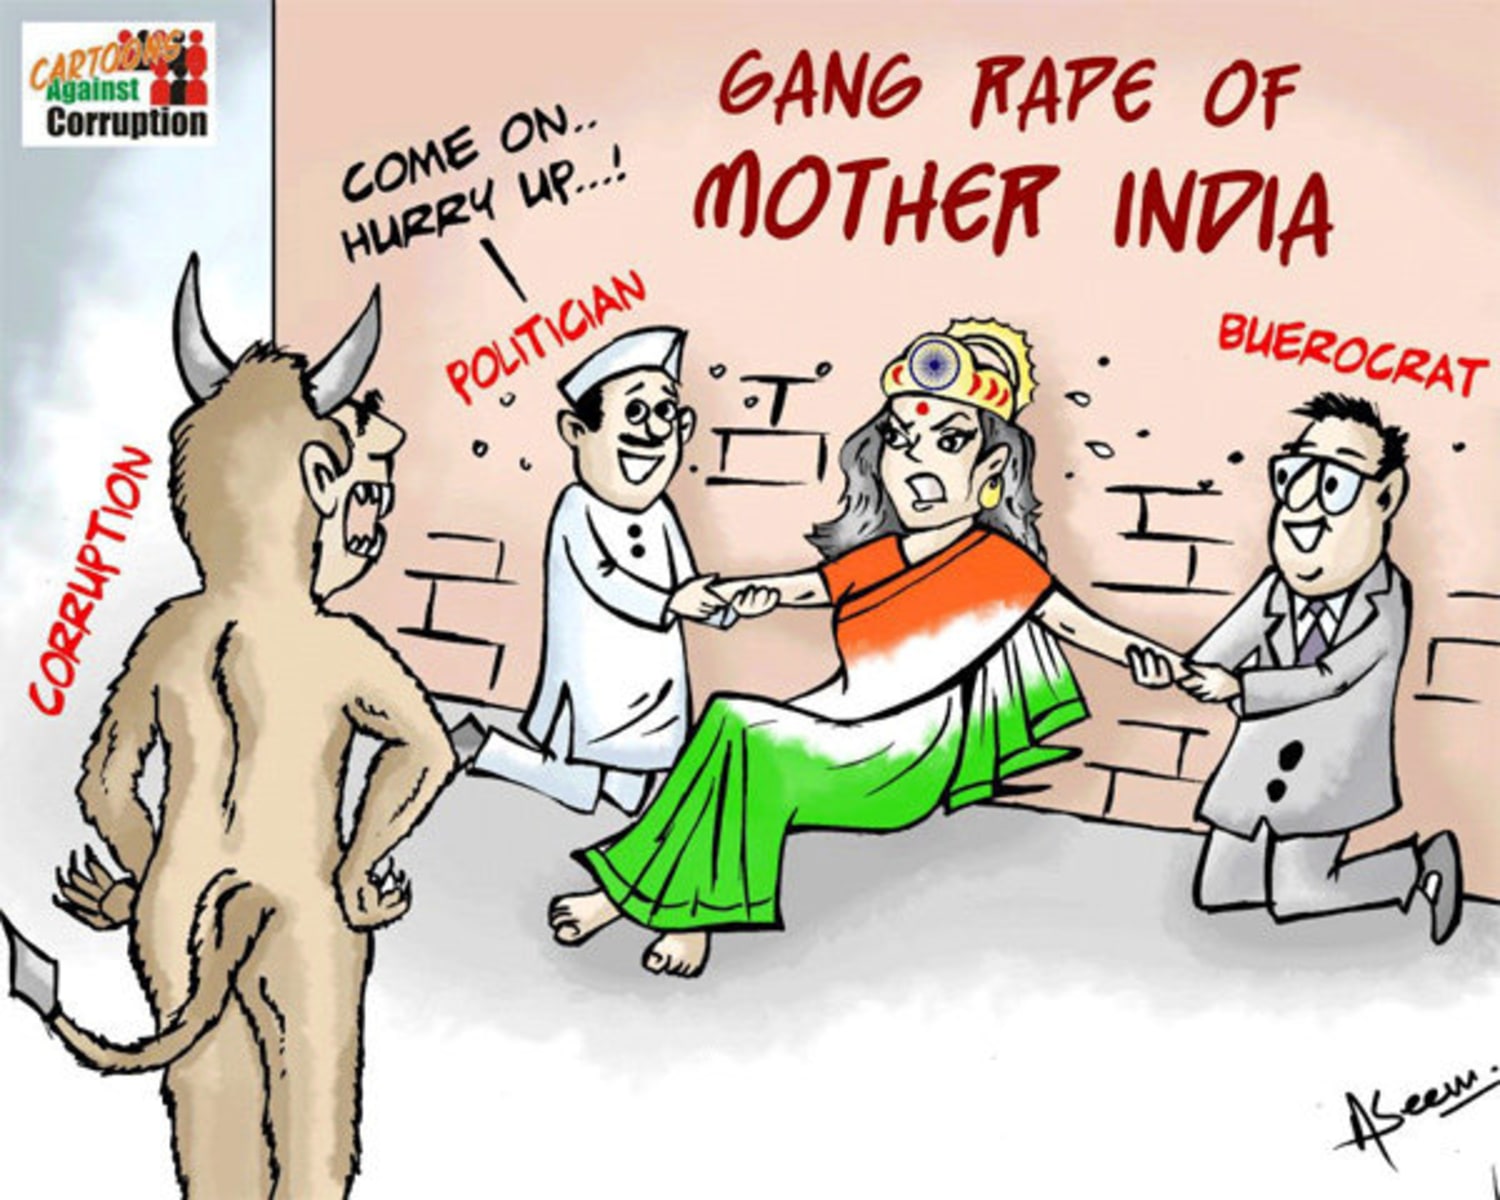 Trivedi's Cartoon Media Storm in India